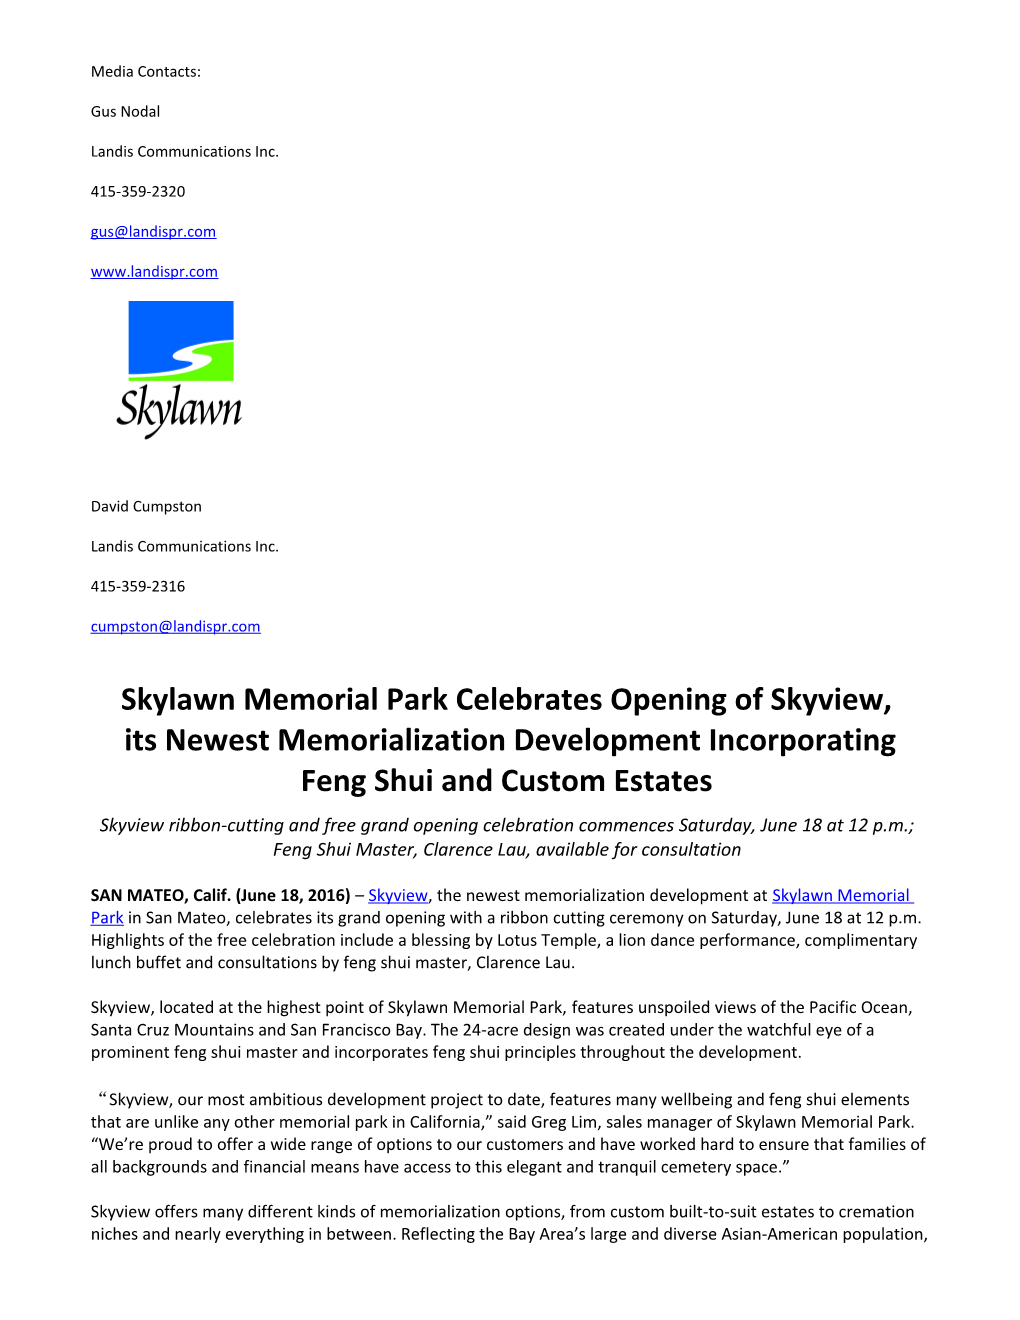 Skylawn Memorial Park Celebrates Opening of Skyview